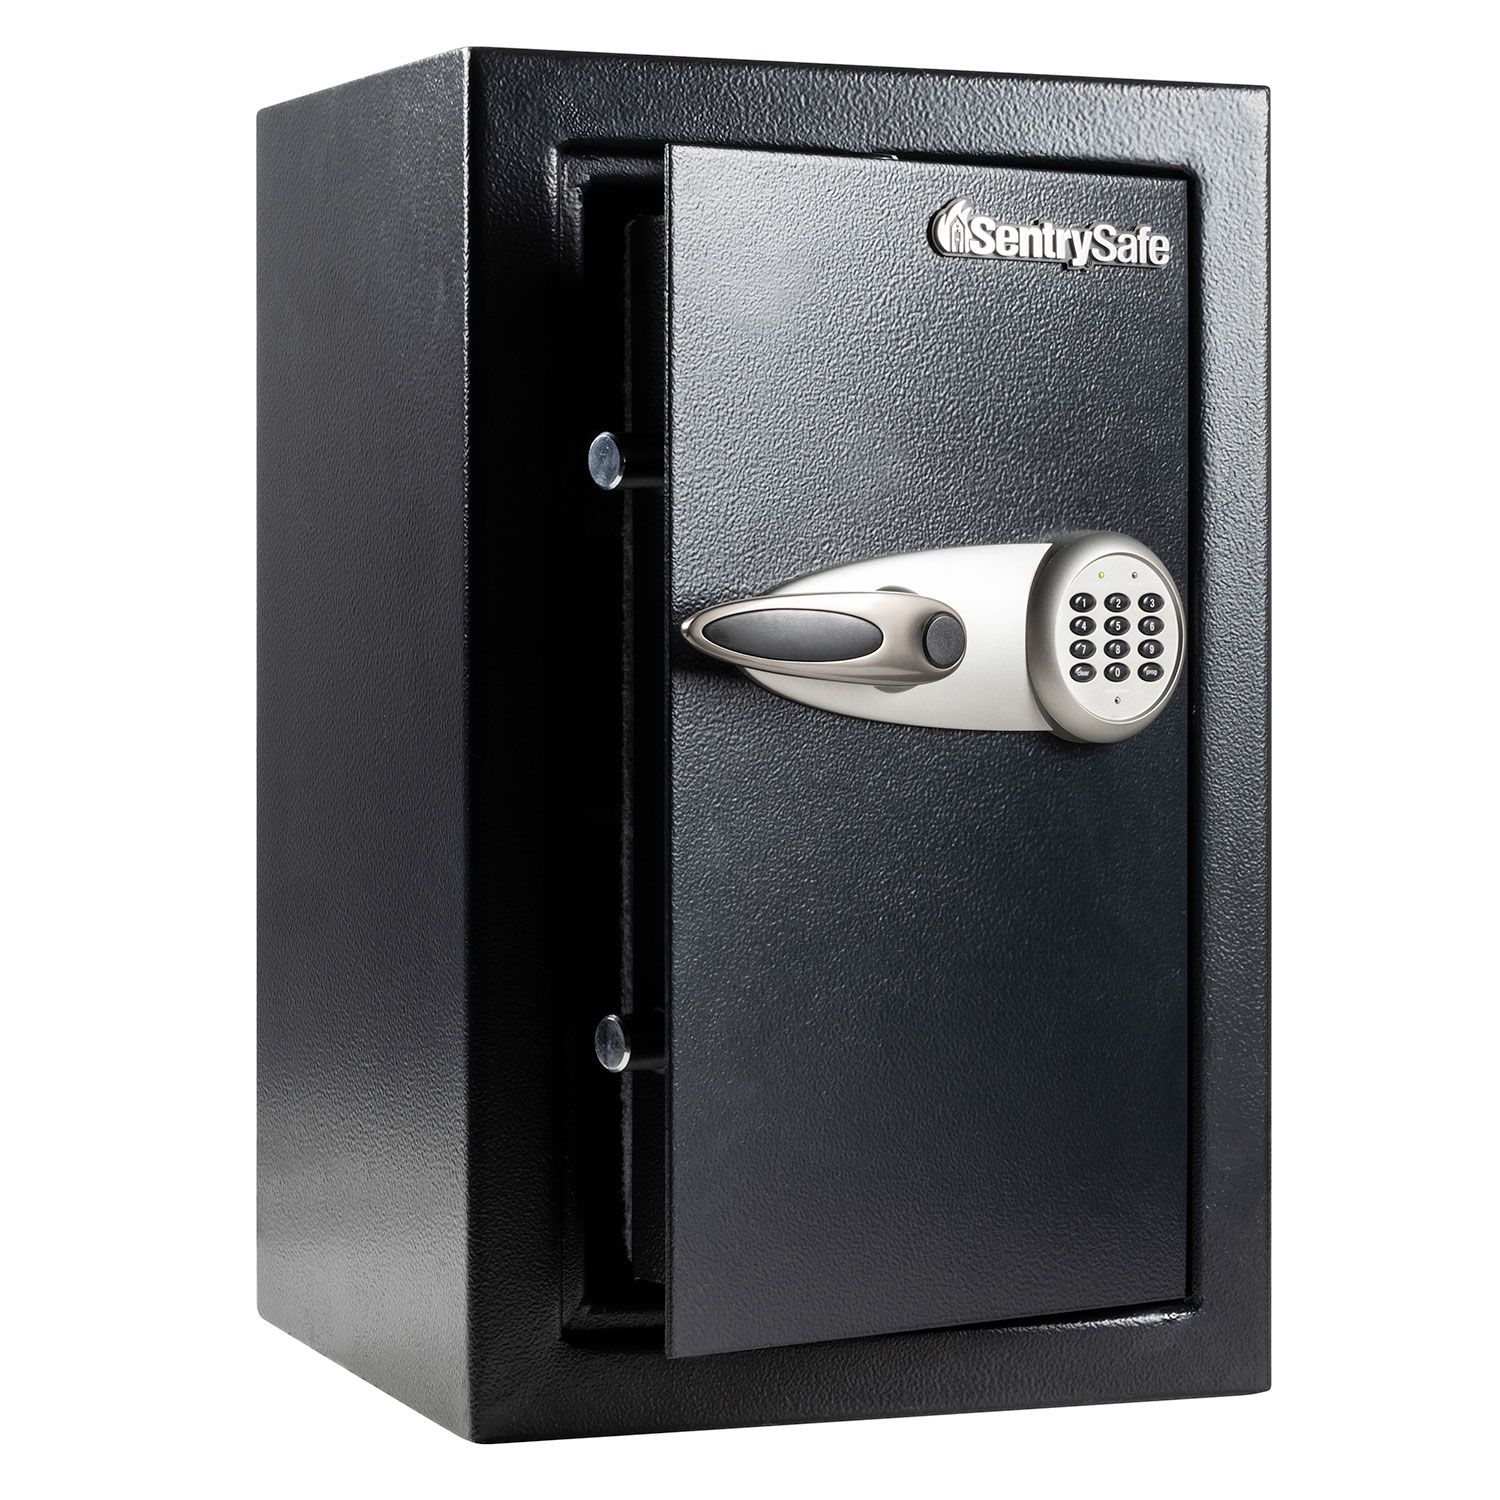 SentrySafe (T6-331) 2.2 Cubic Feet Security Safe with Digital Keypad